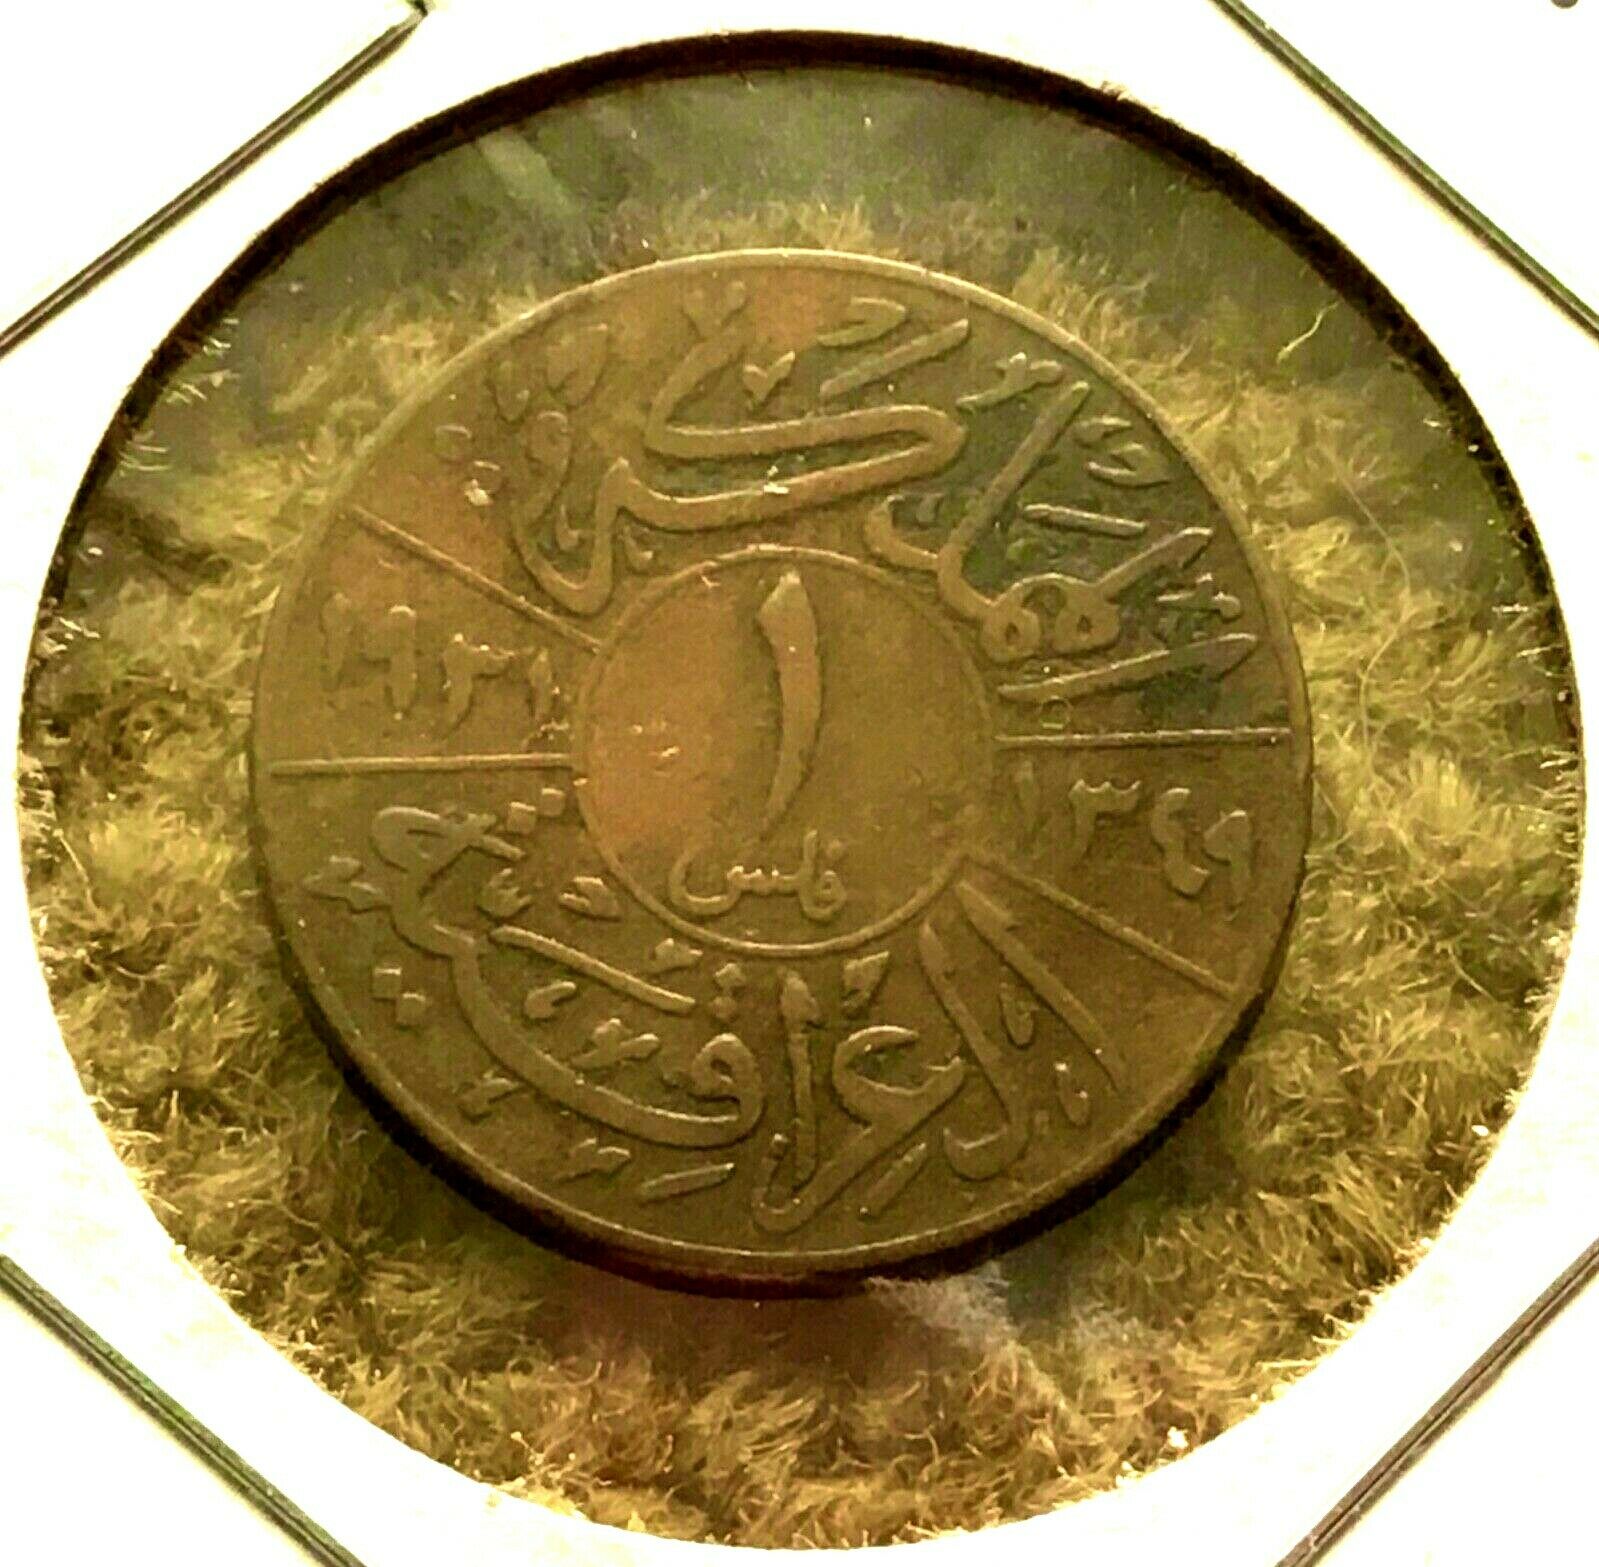 Iraq 1 Fils 1931 Bronze Coin, King Faisal I